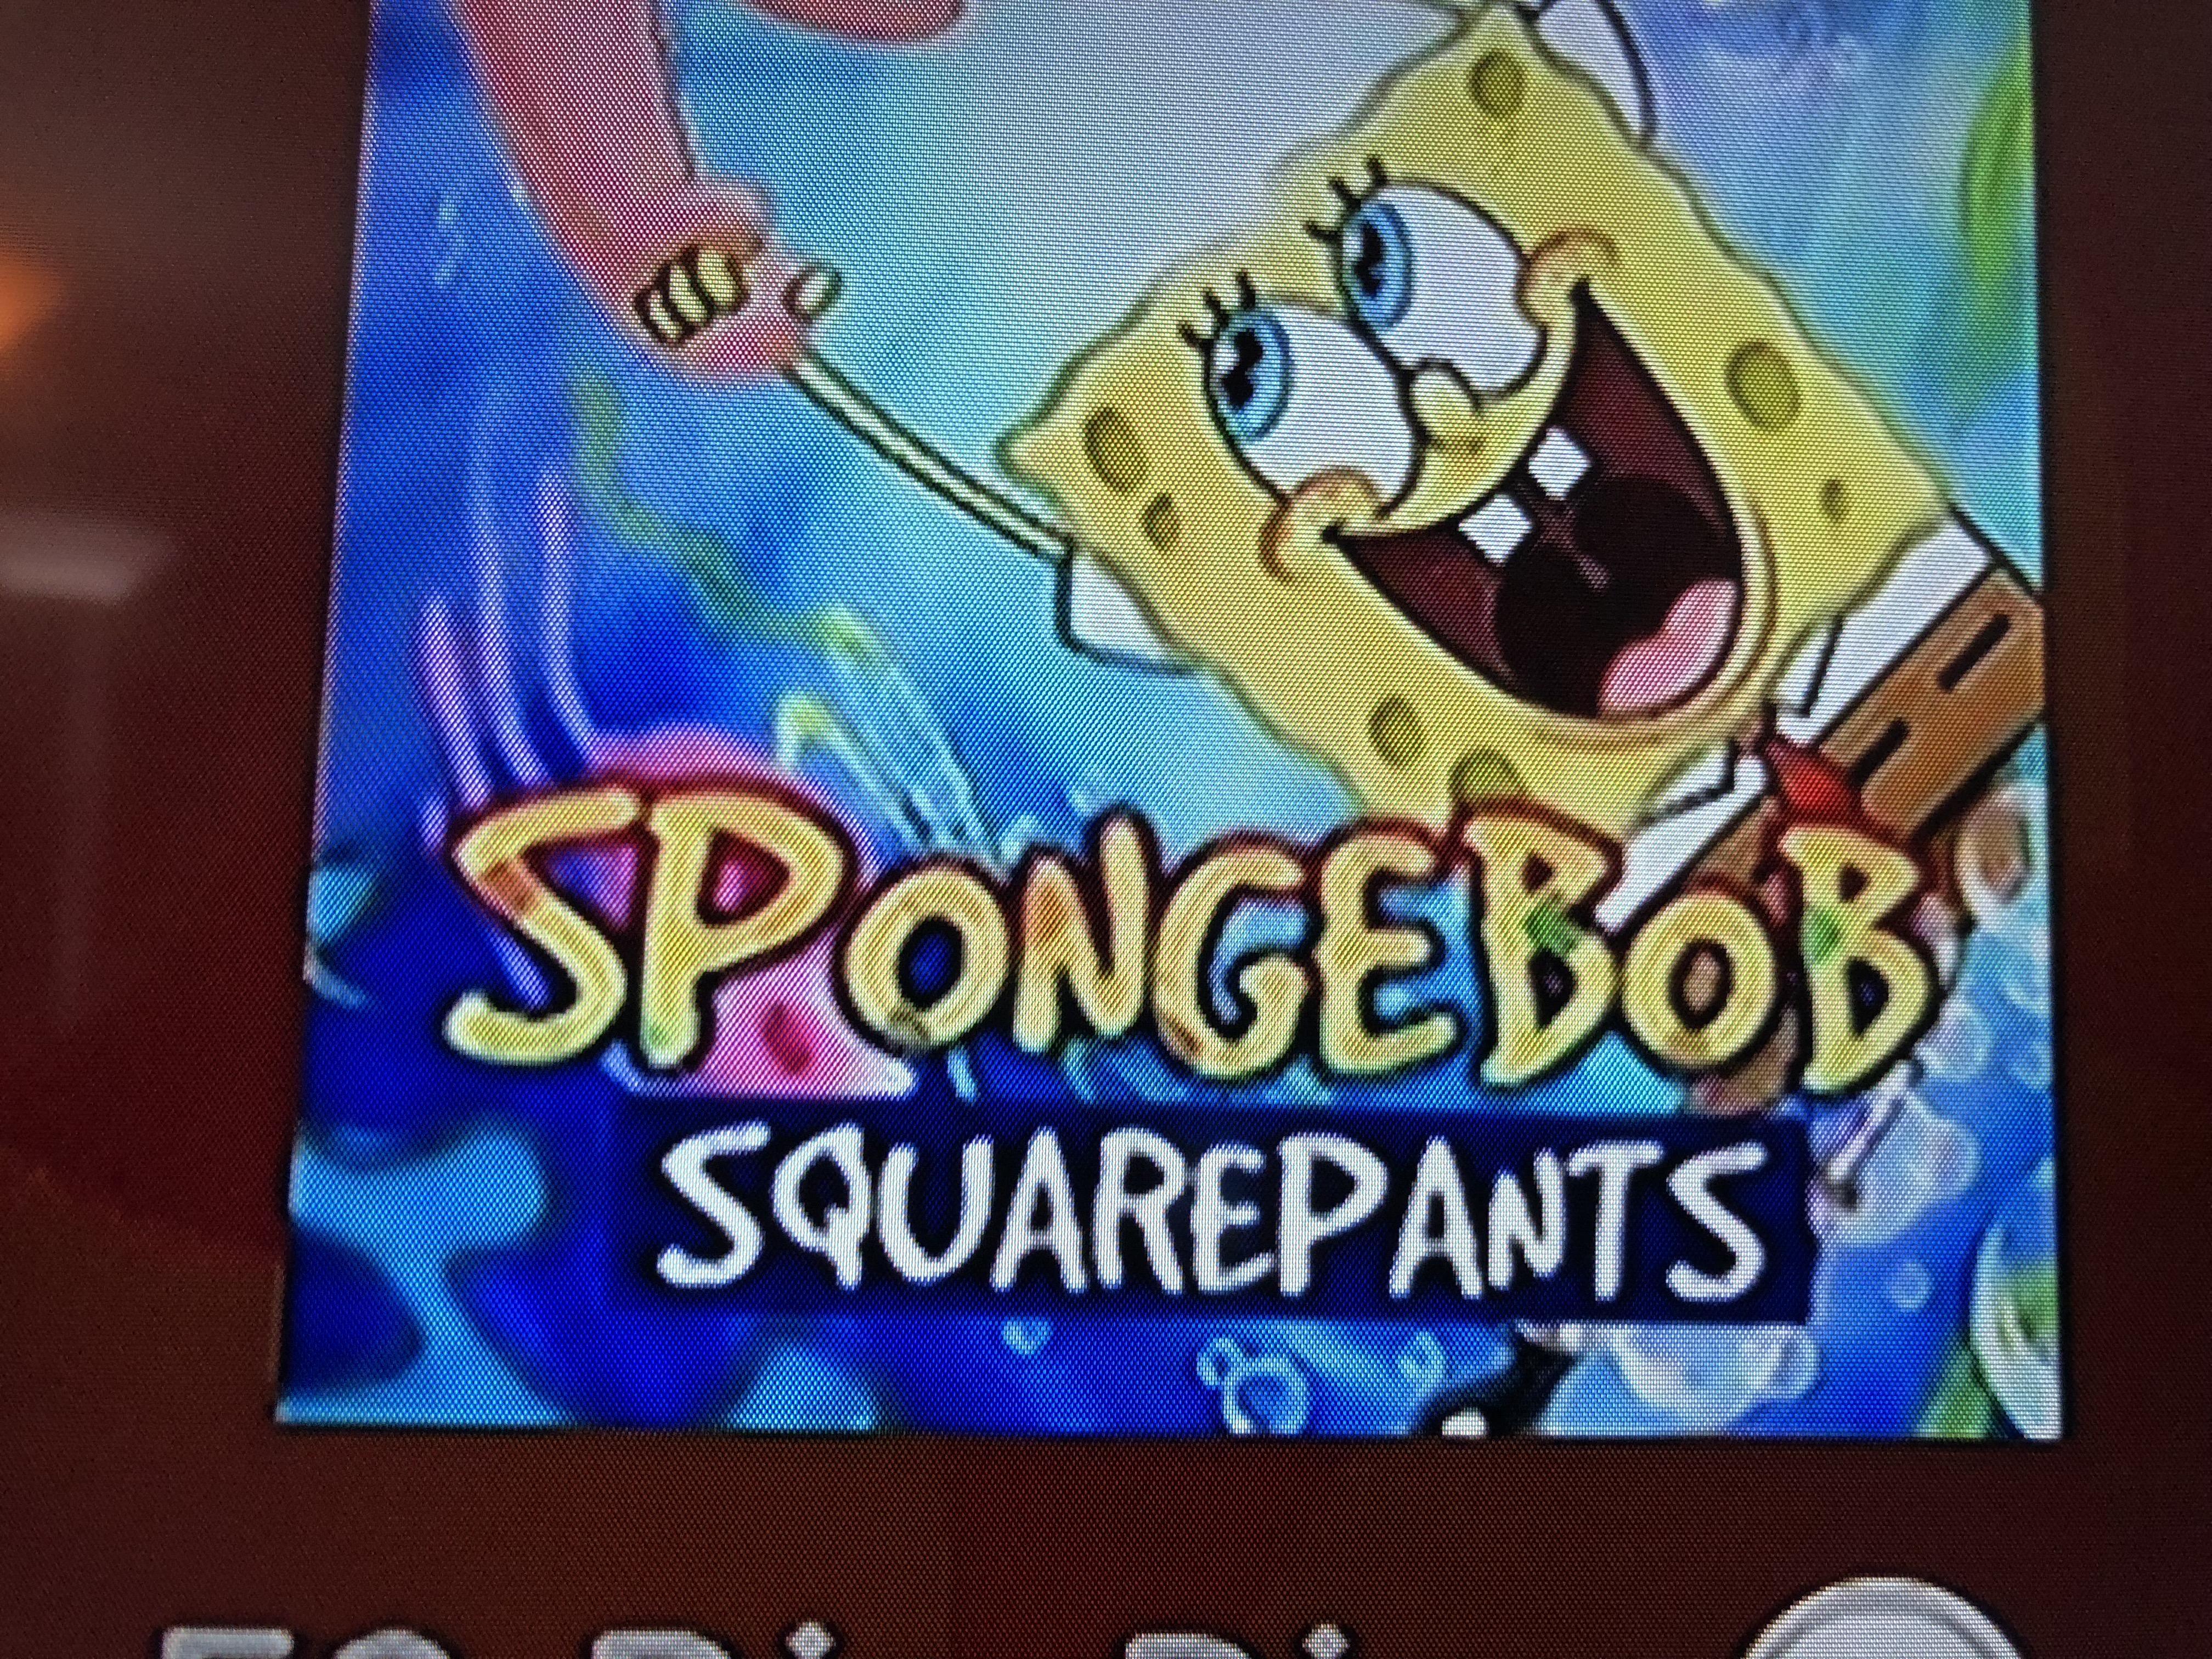 Old Spongebob Logo - Did they change the spongebob squarepants logo???? : spongebob